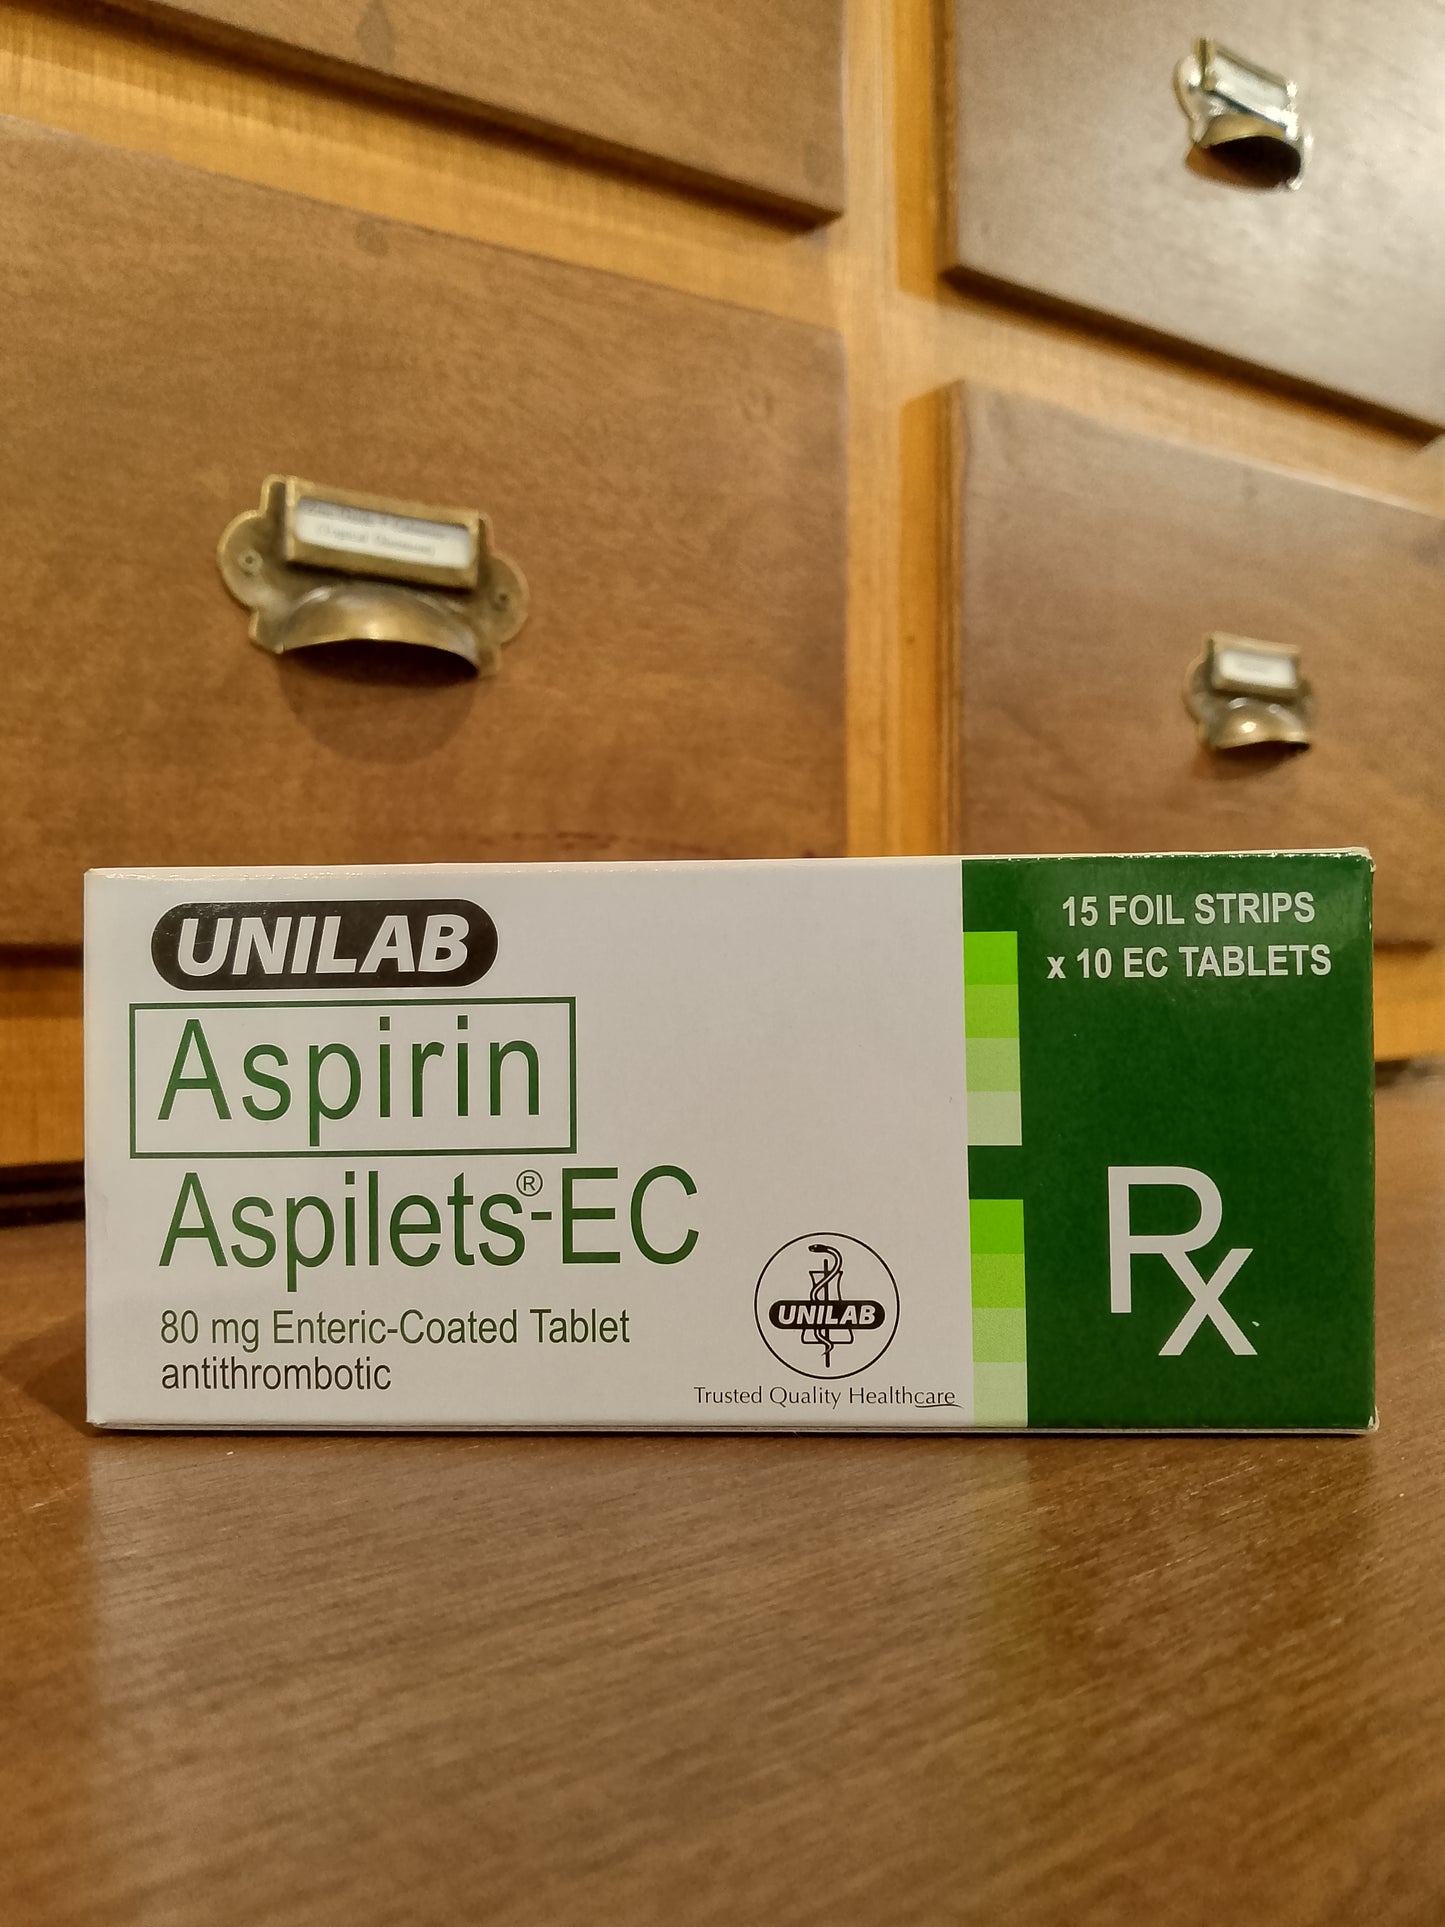 Aspirin (Aspilets-EC) 80mg Enteric-Coated Tablet